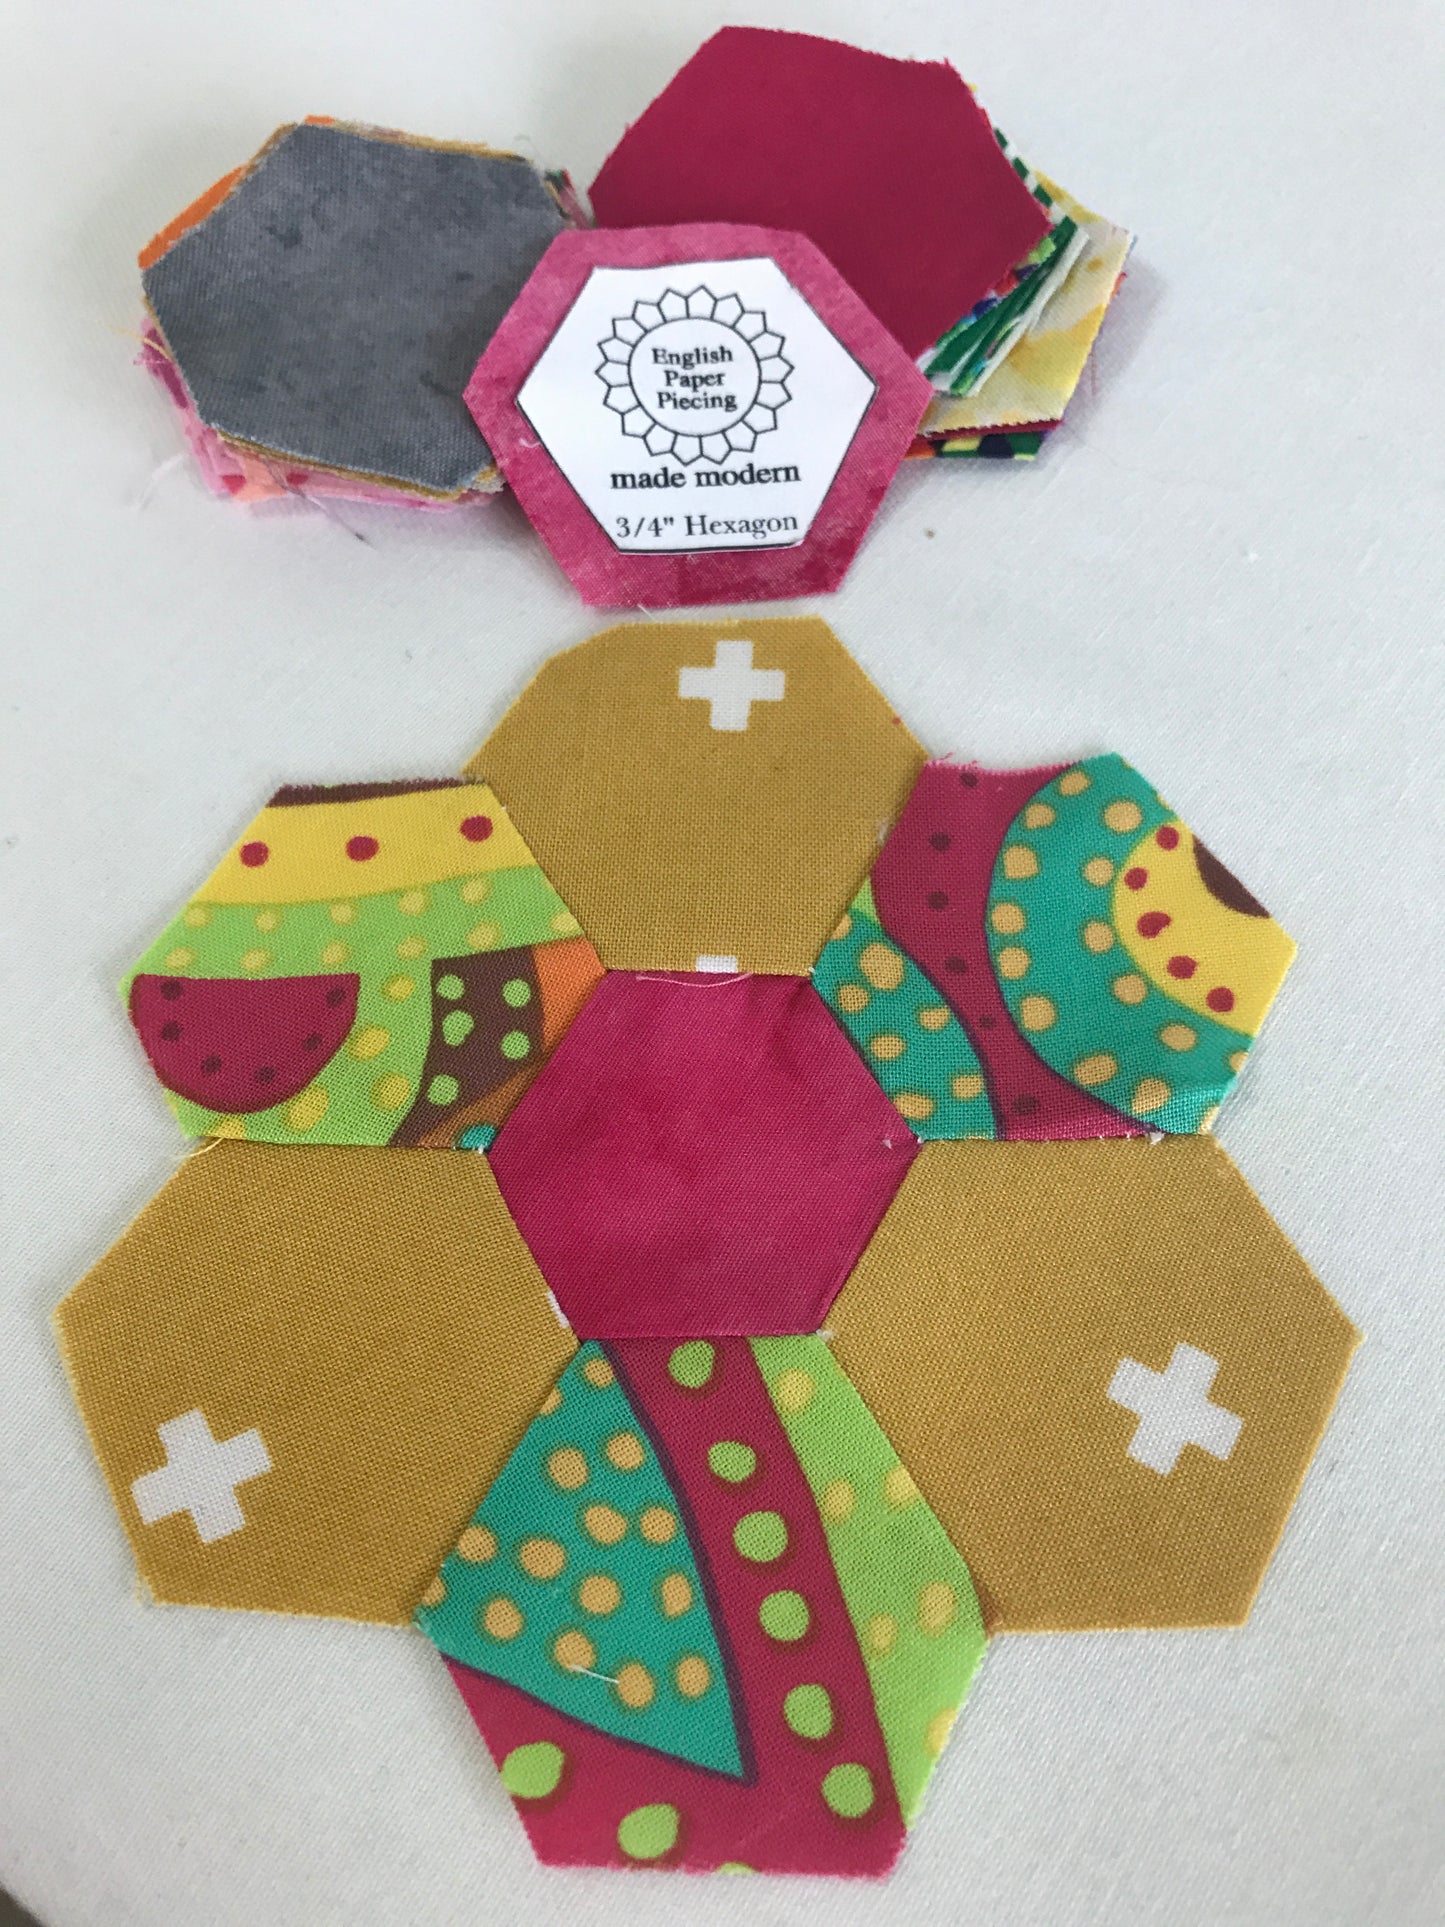 English Paper Piecing Made Modern Hexagons 3/4"